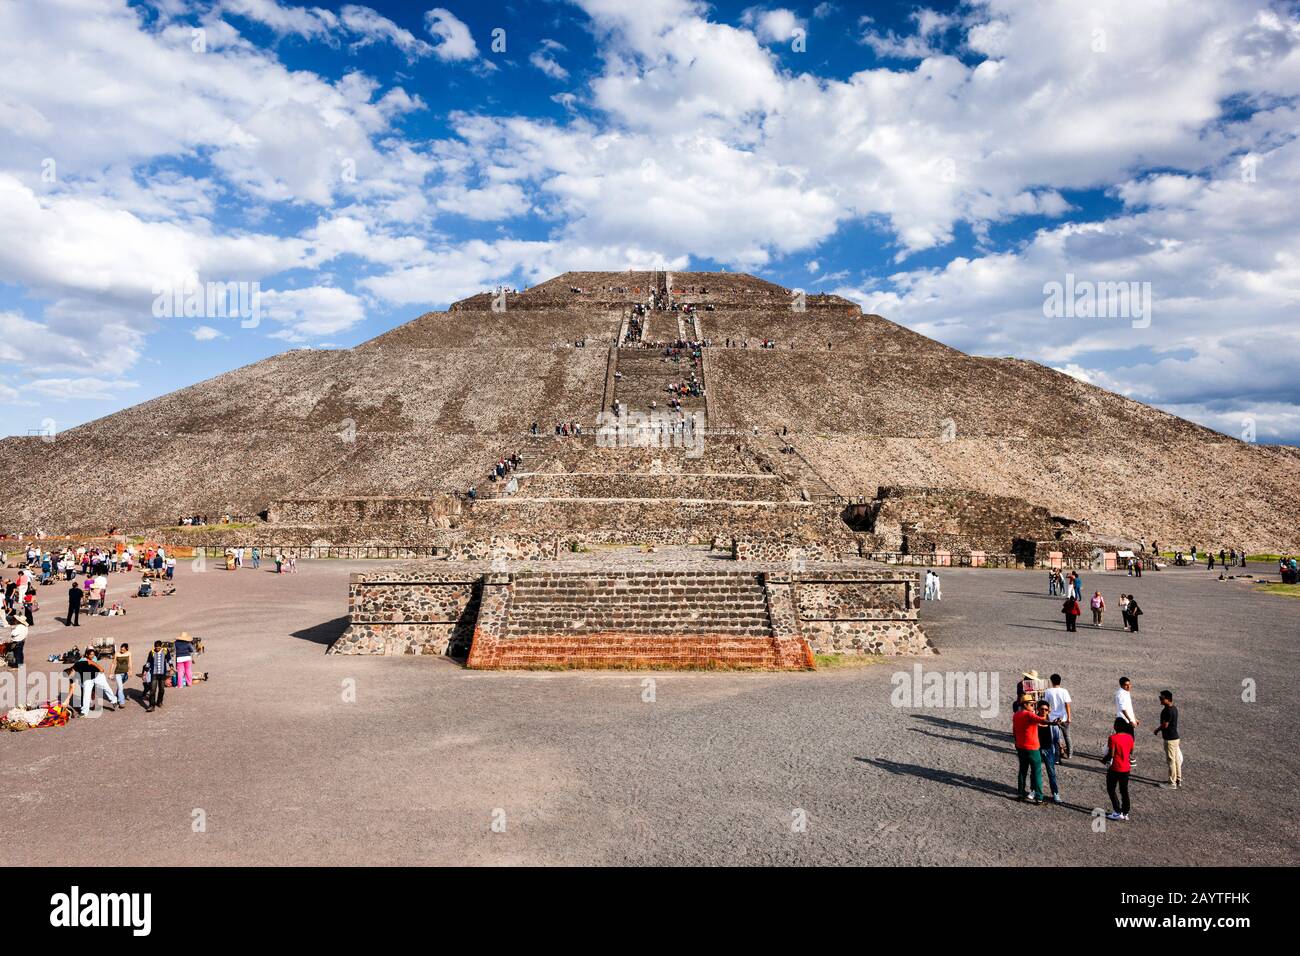 Pyramide der Sonne, Teotihuacan, Vorort von Mexiko-Stadt, Mexiko, Mittelamerika Stockfoto